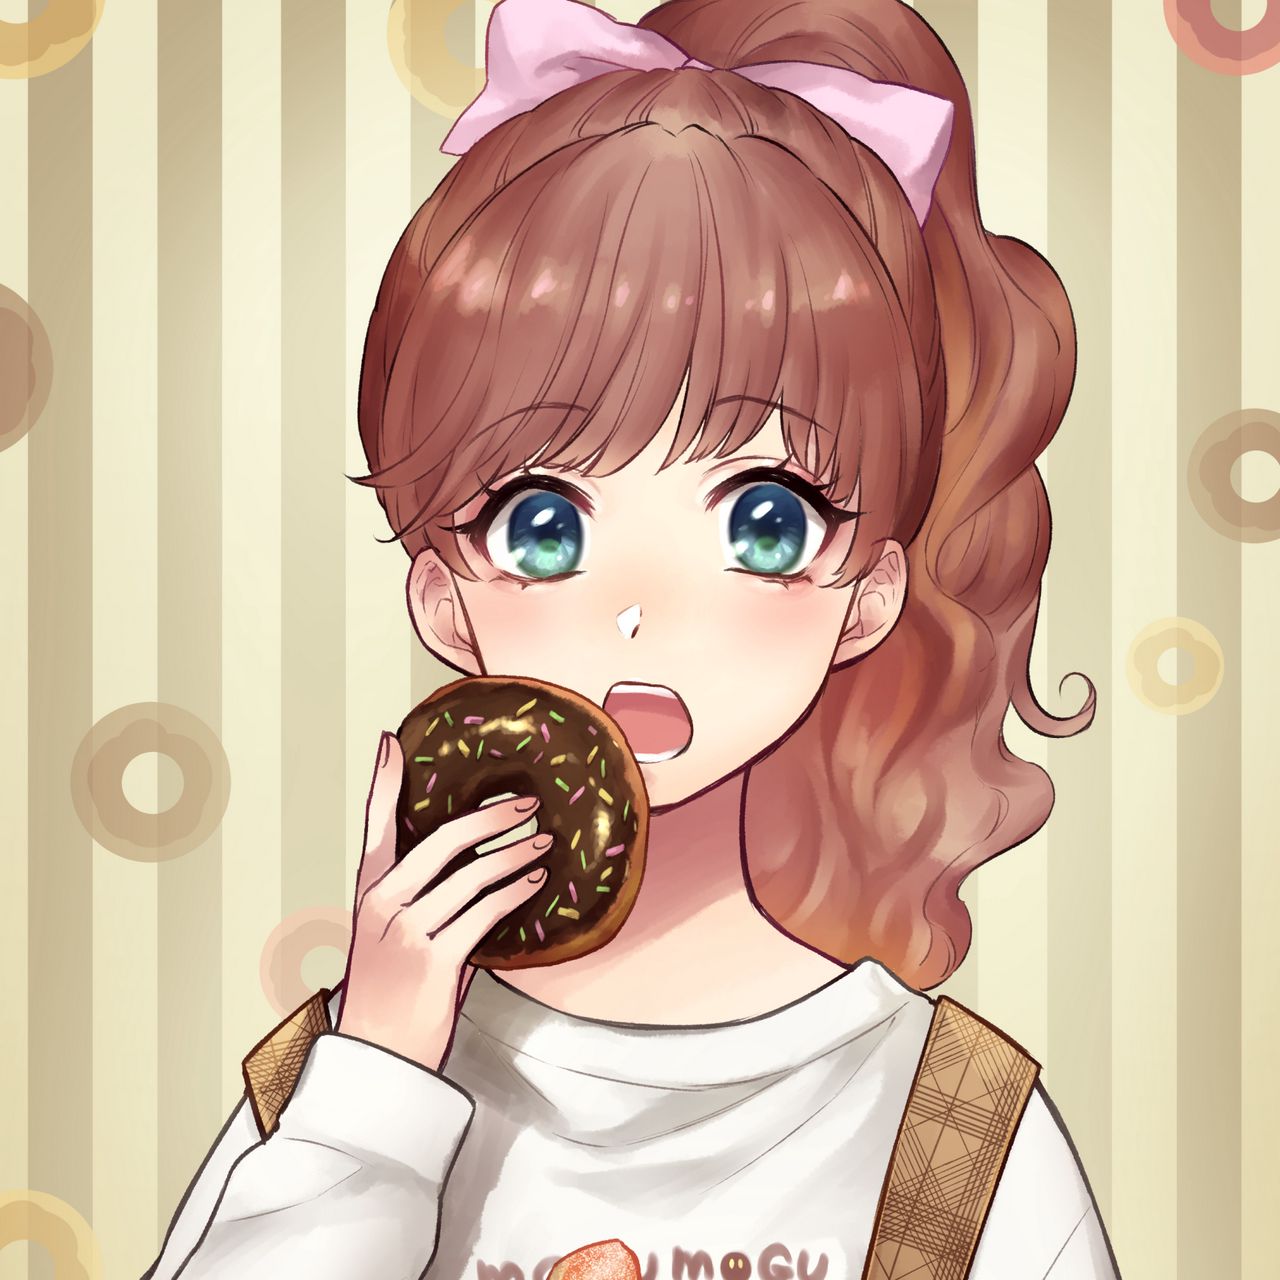 Premium Vector | Kawaii food cartoon of donut illustration vector icon of  cute japanese anime manga style